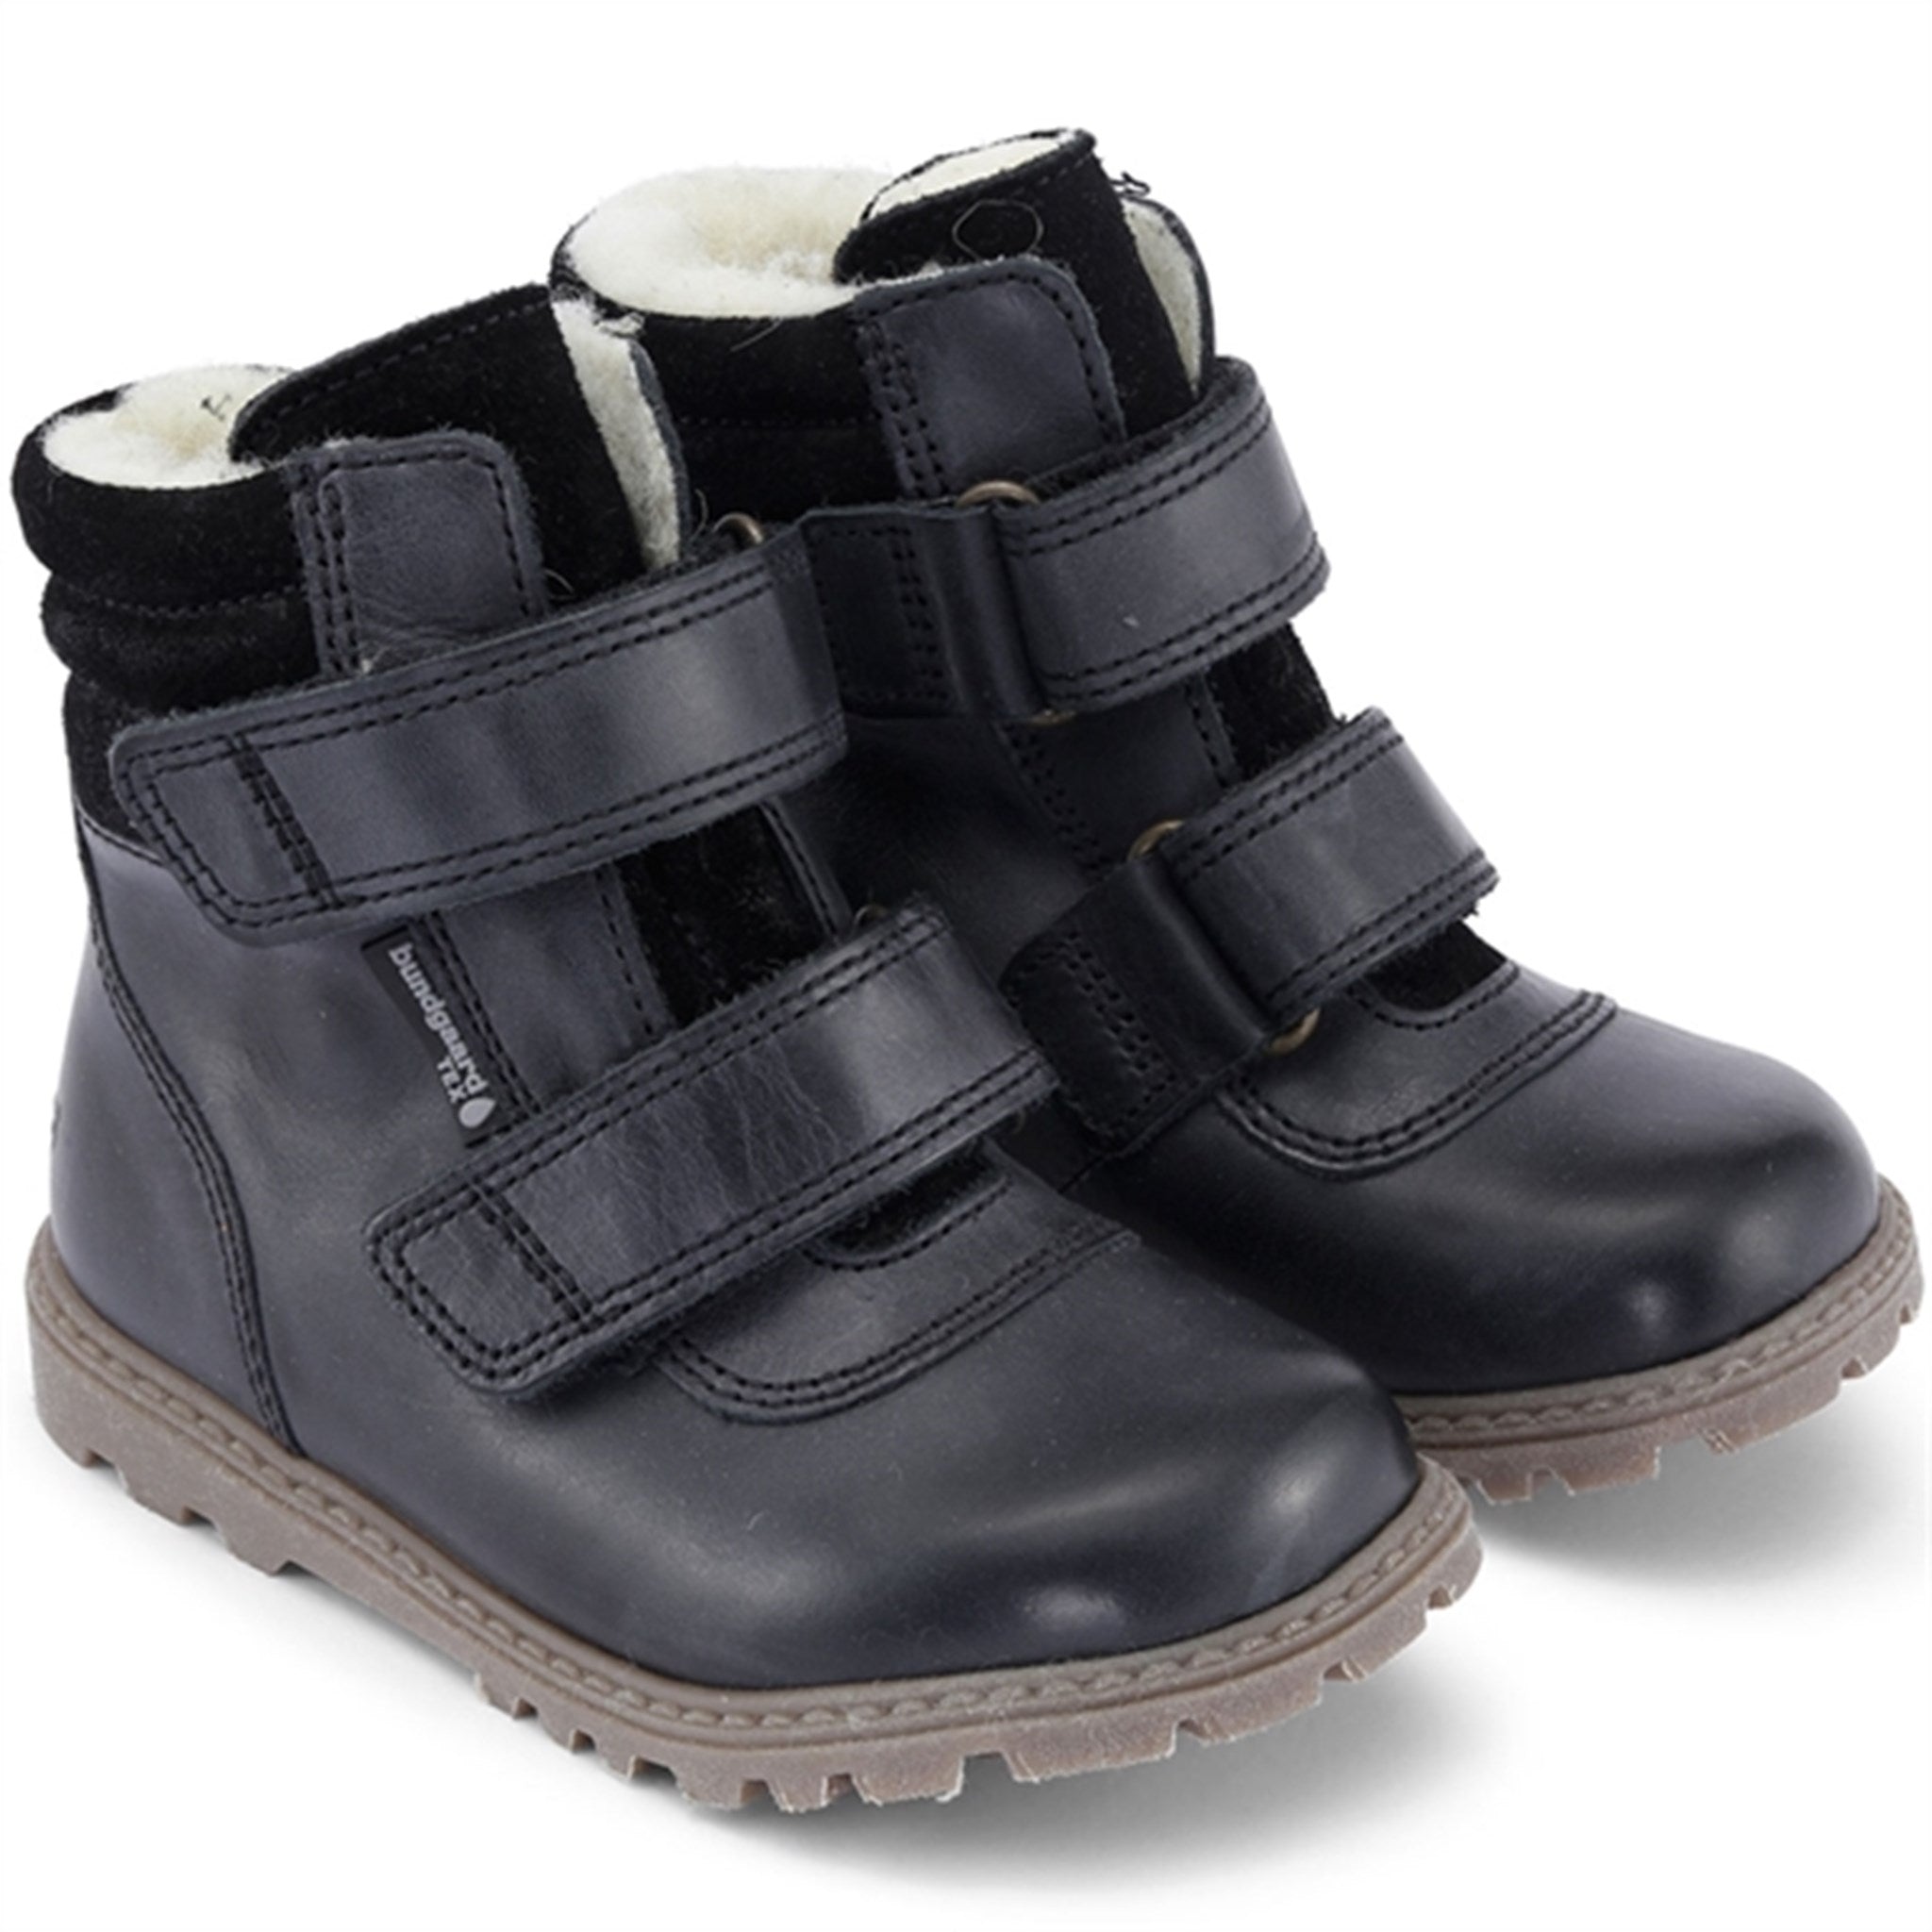 Bundgaard Tokker TEX Winter Boots Black WS